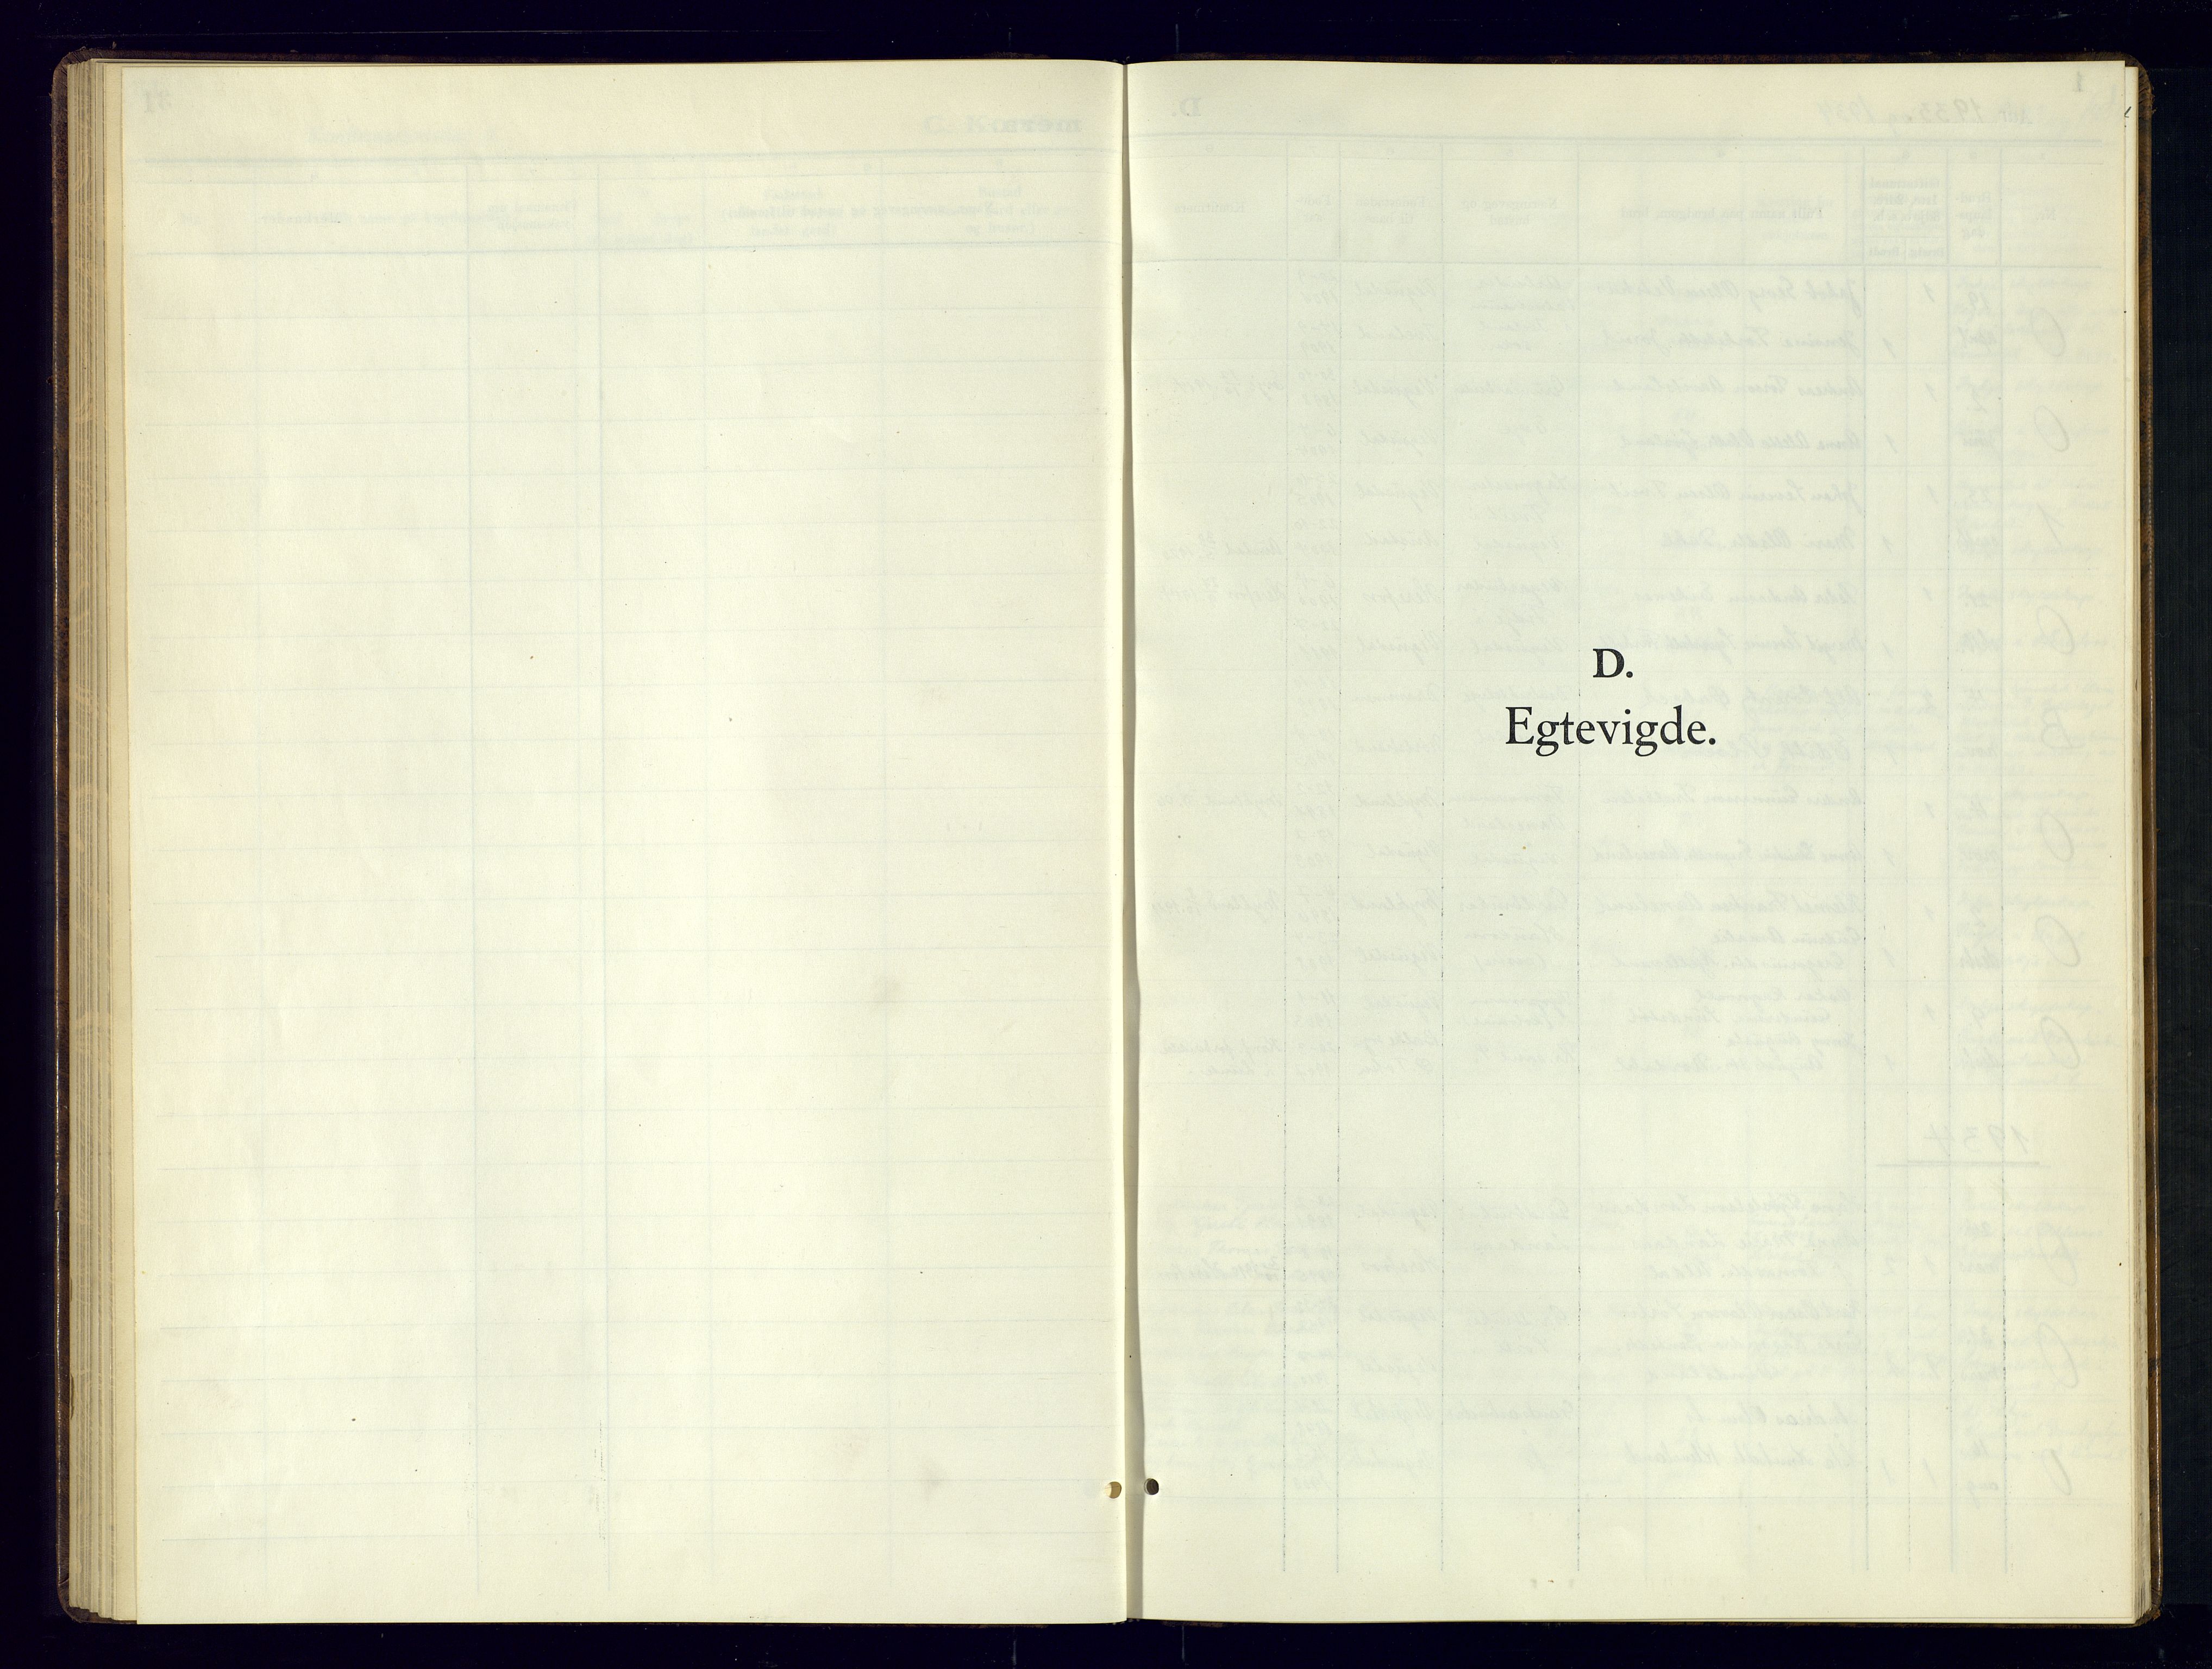 Herefoss sokneprestkontor, SAK/1111-0019/F/Fb/Fbb/L0005: Parish register (copy) no. B-5, 1933-1961